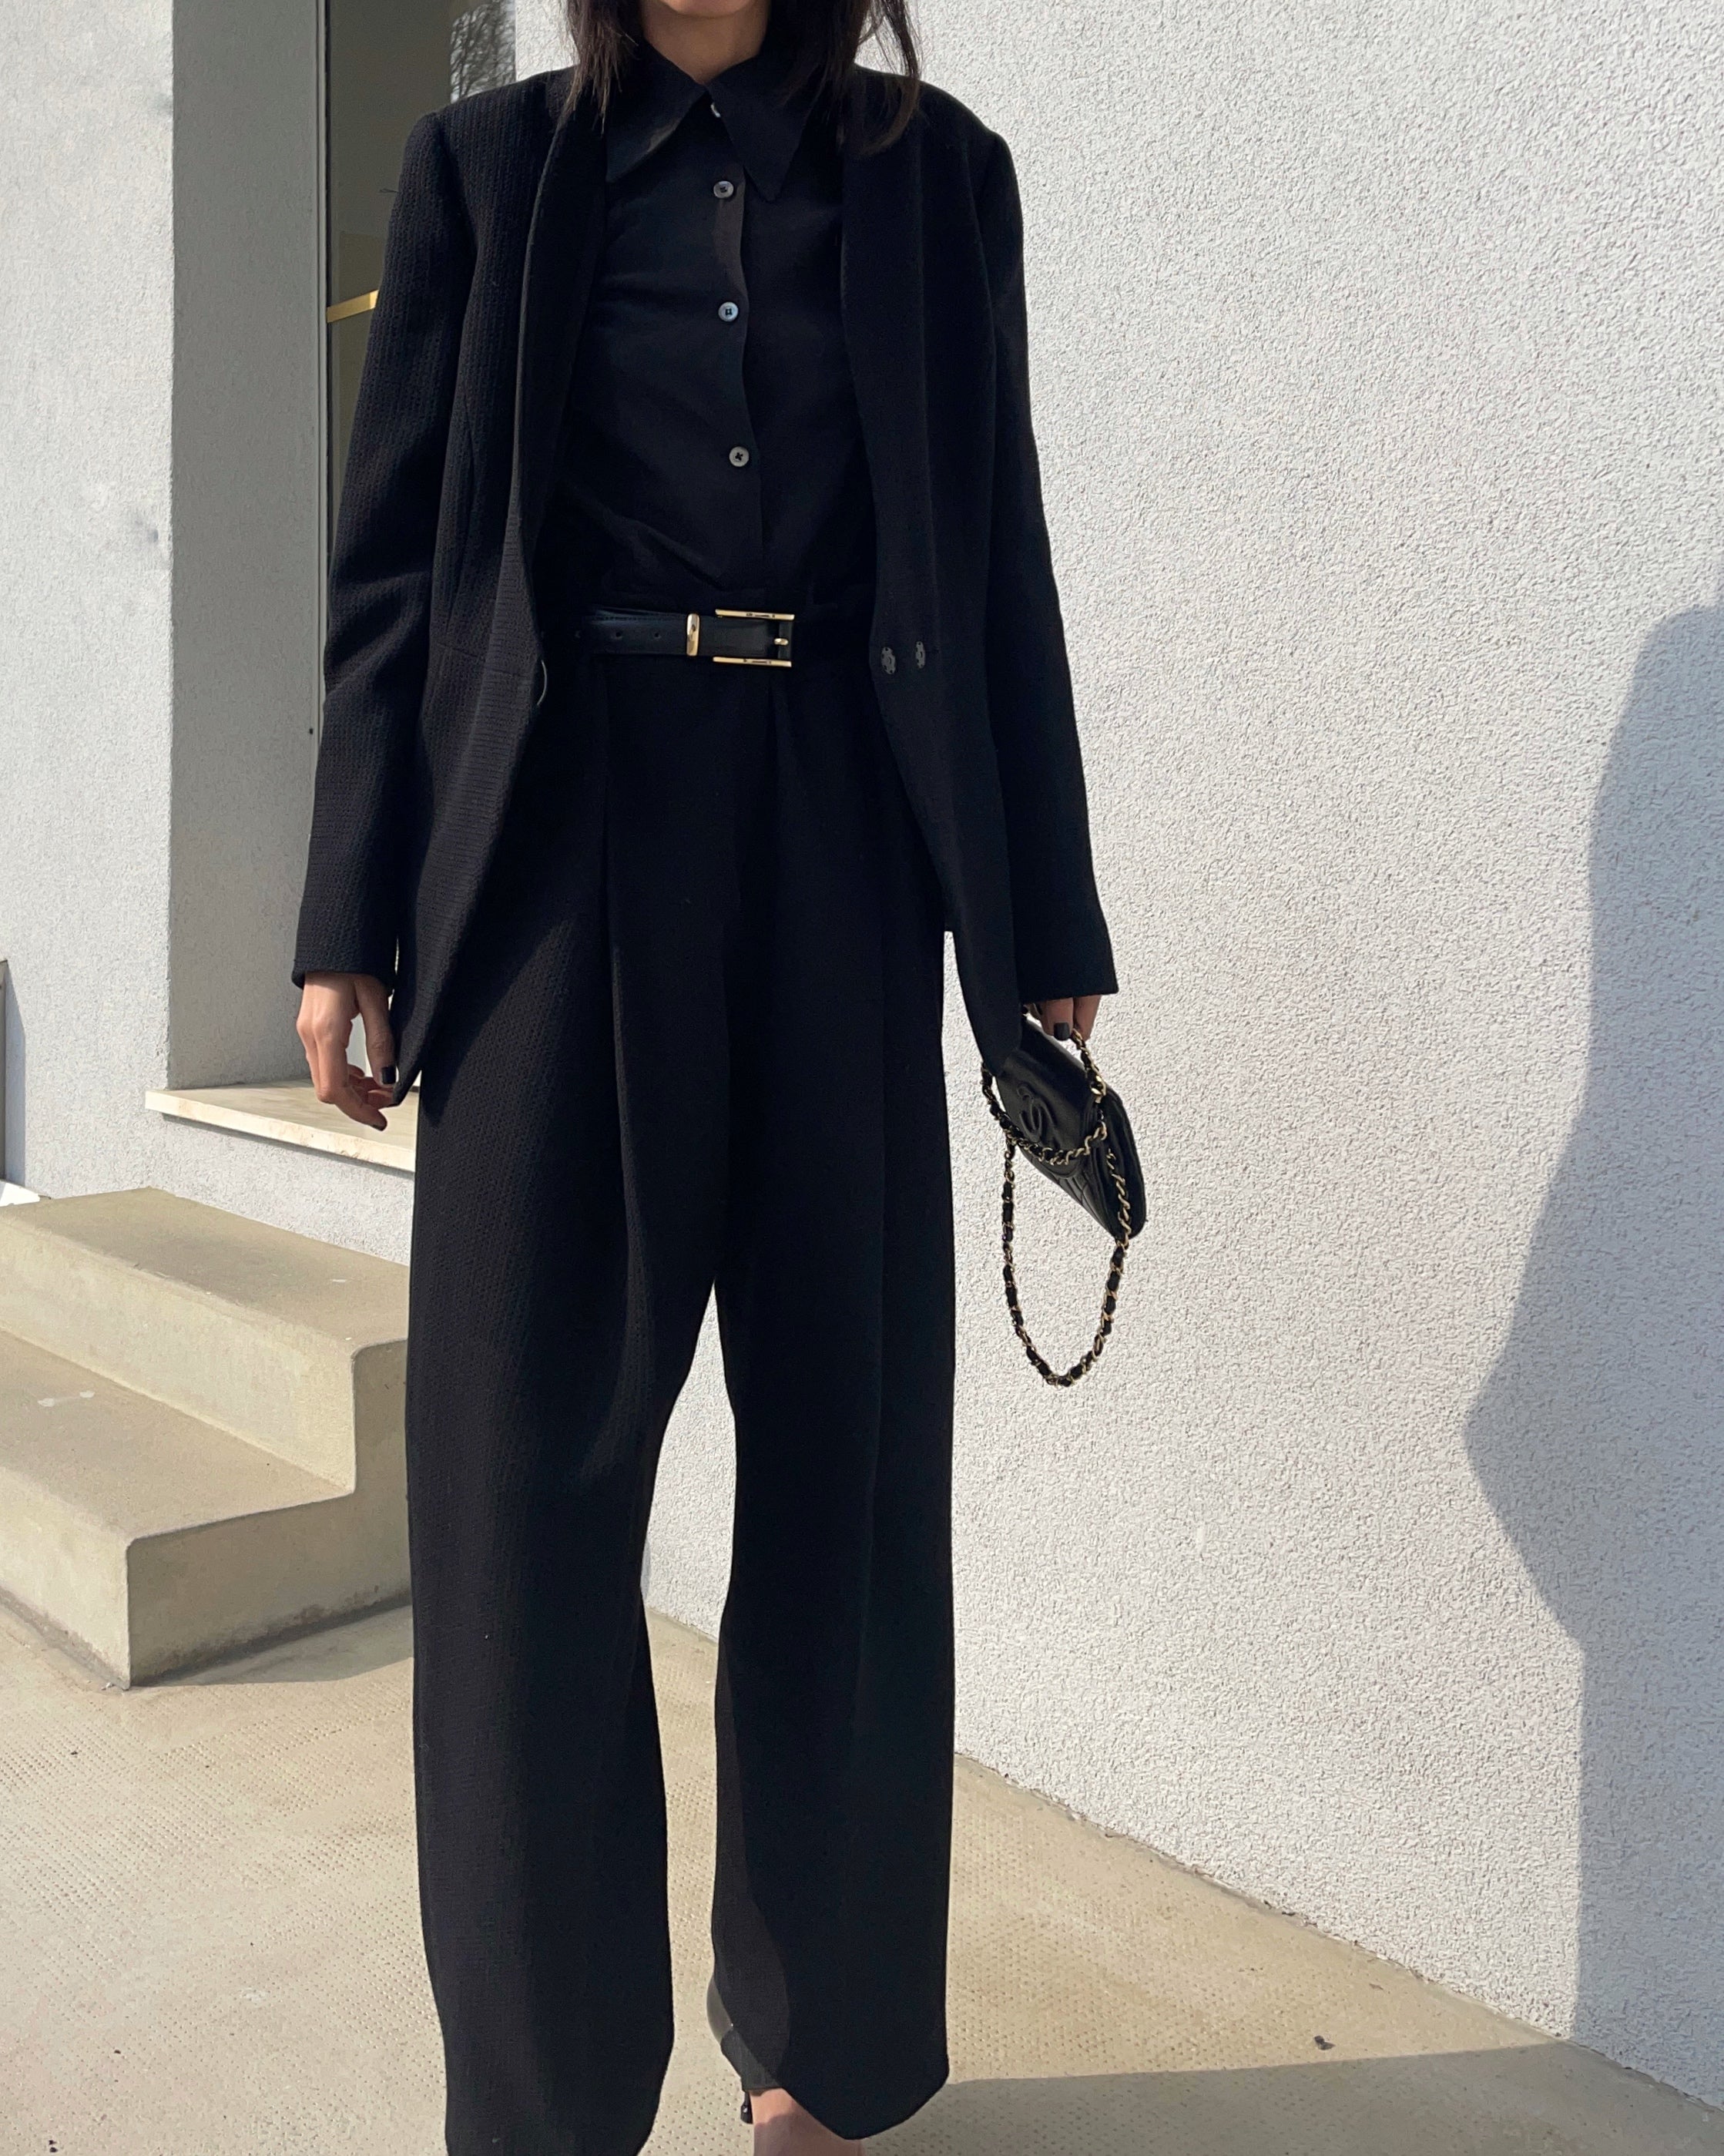 Armani collezioni black suit